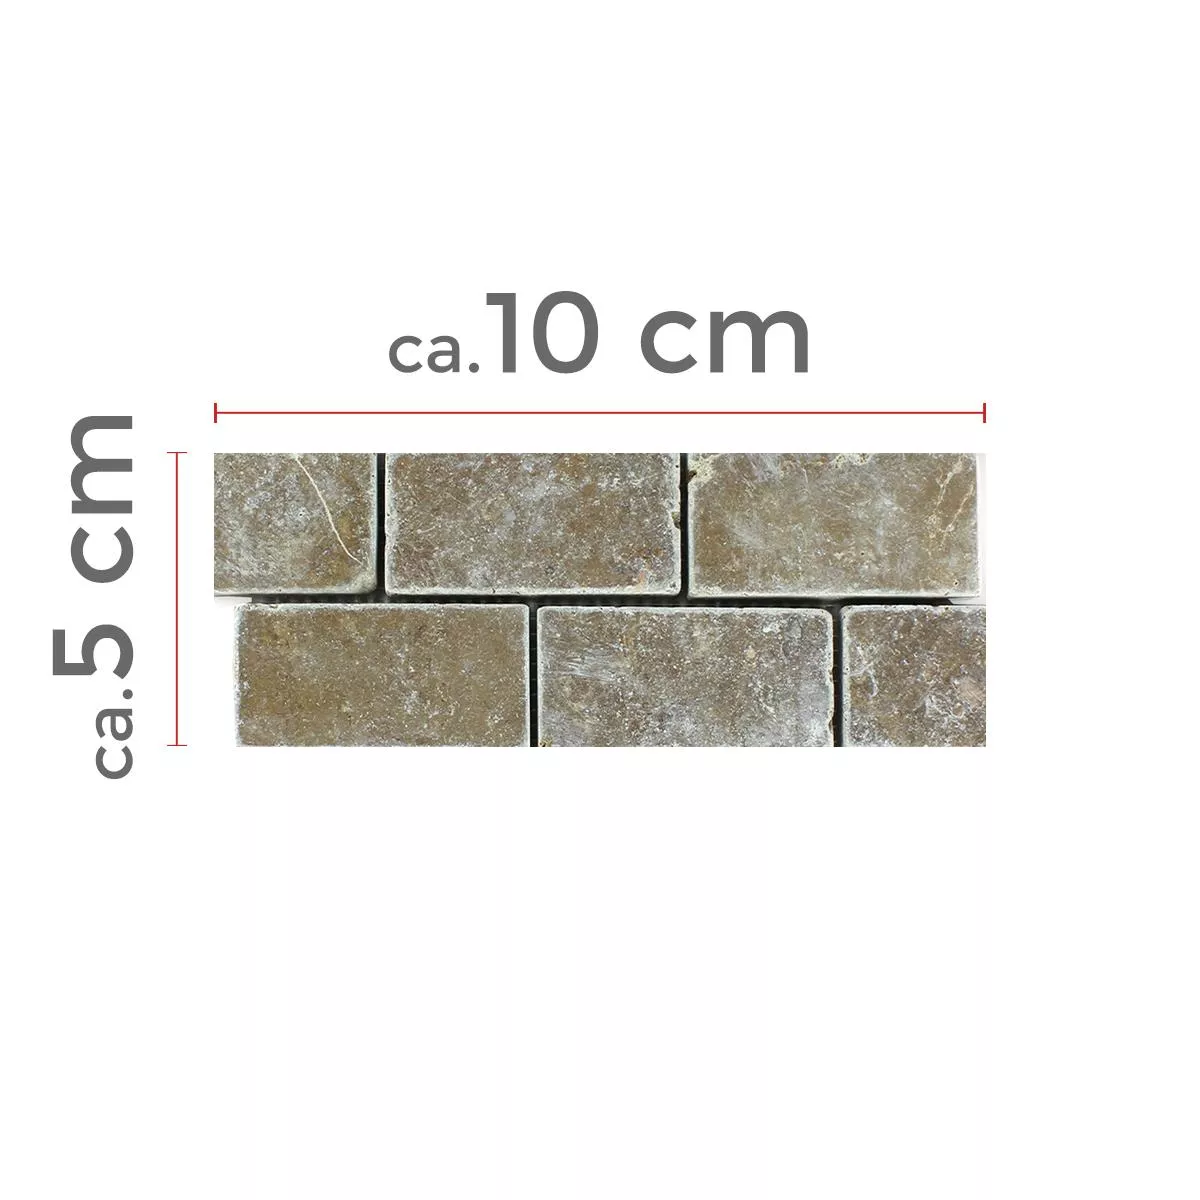 Sample Travertine Tiles Noce Brick